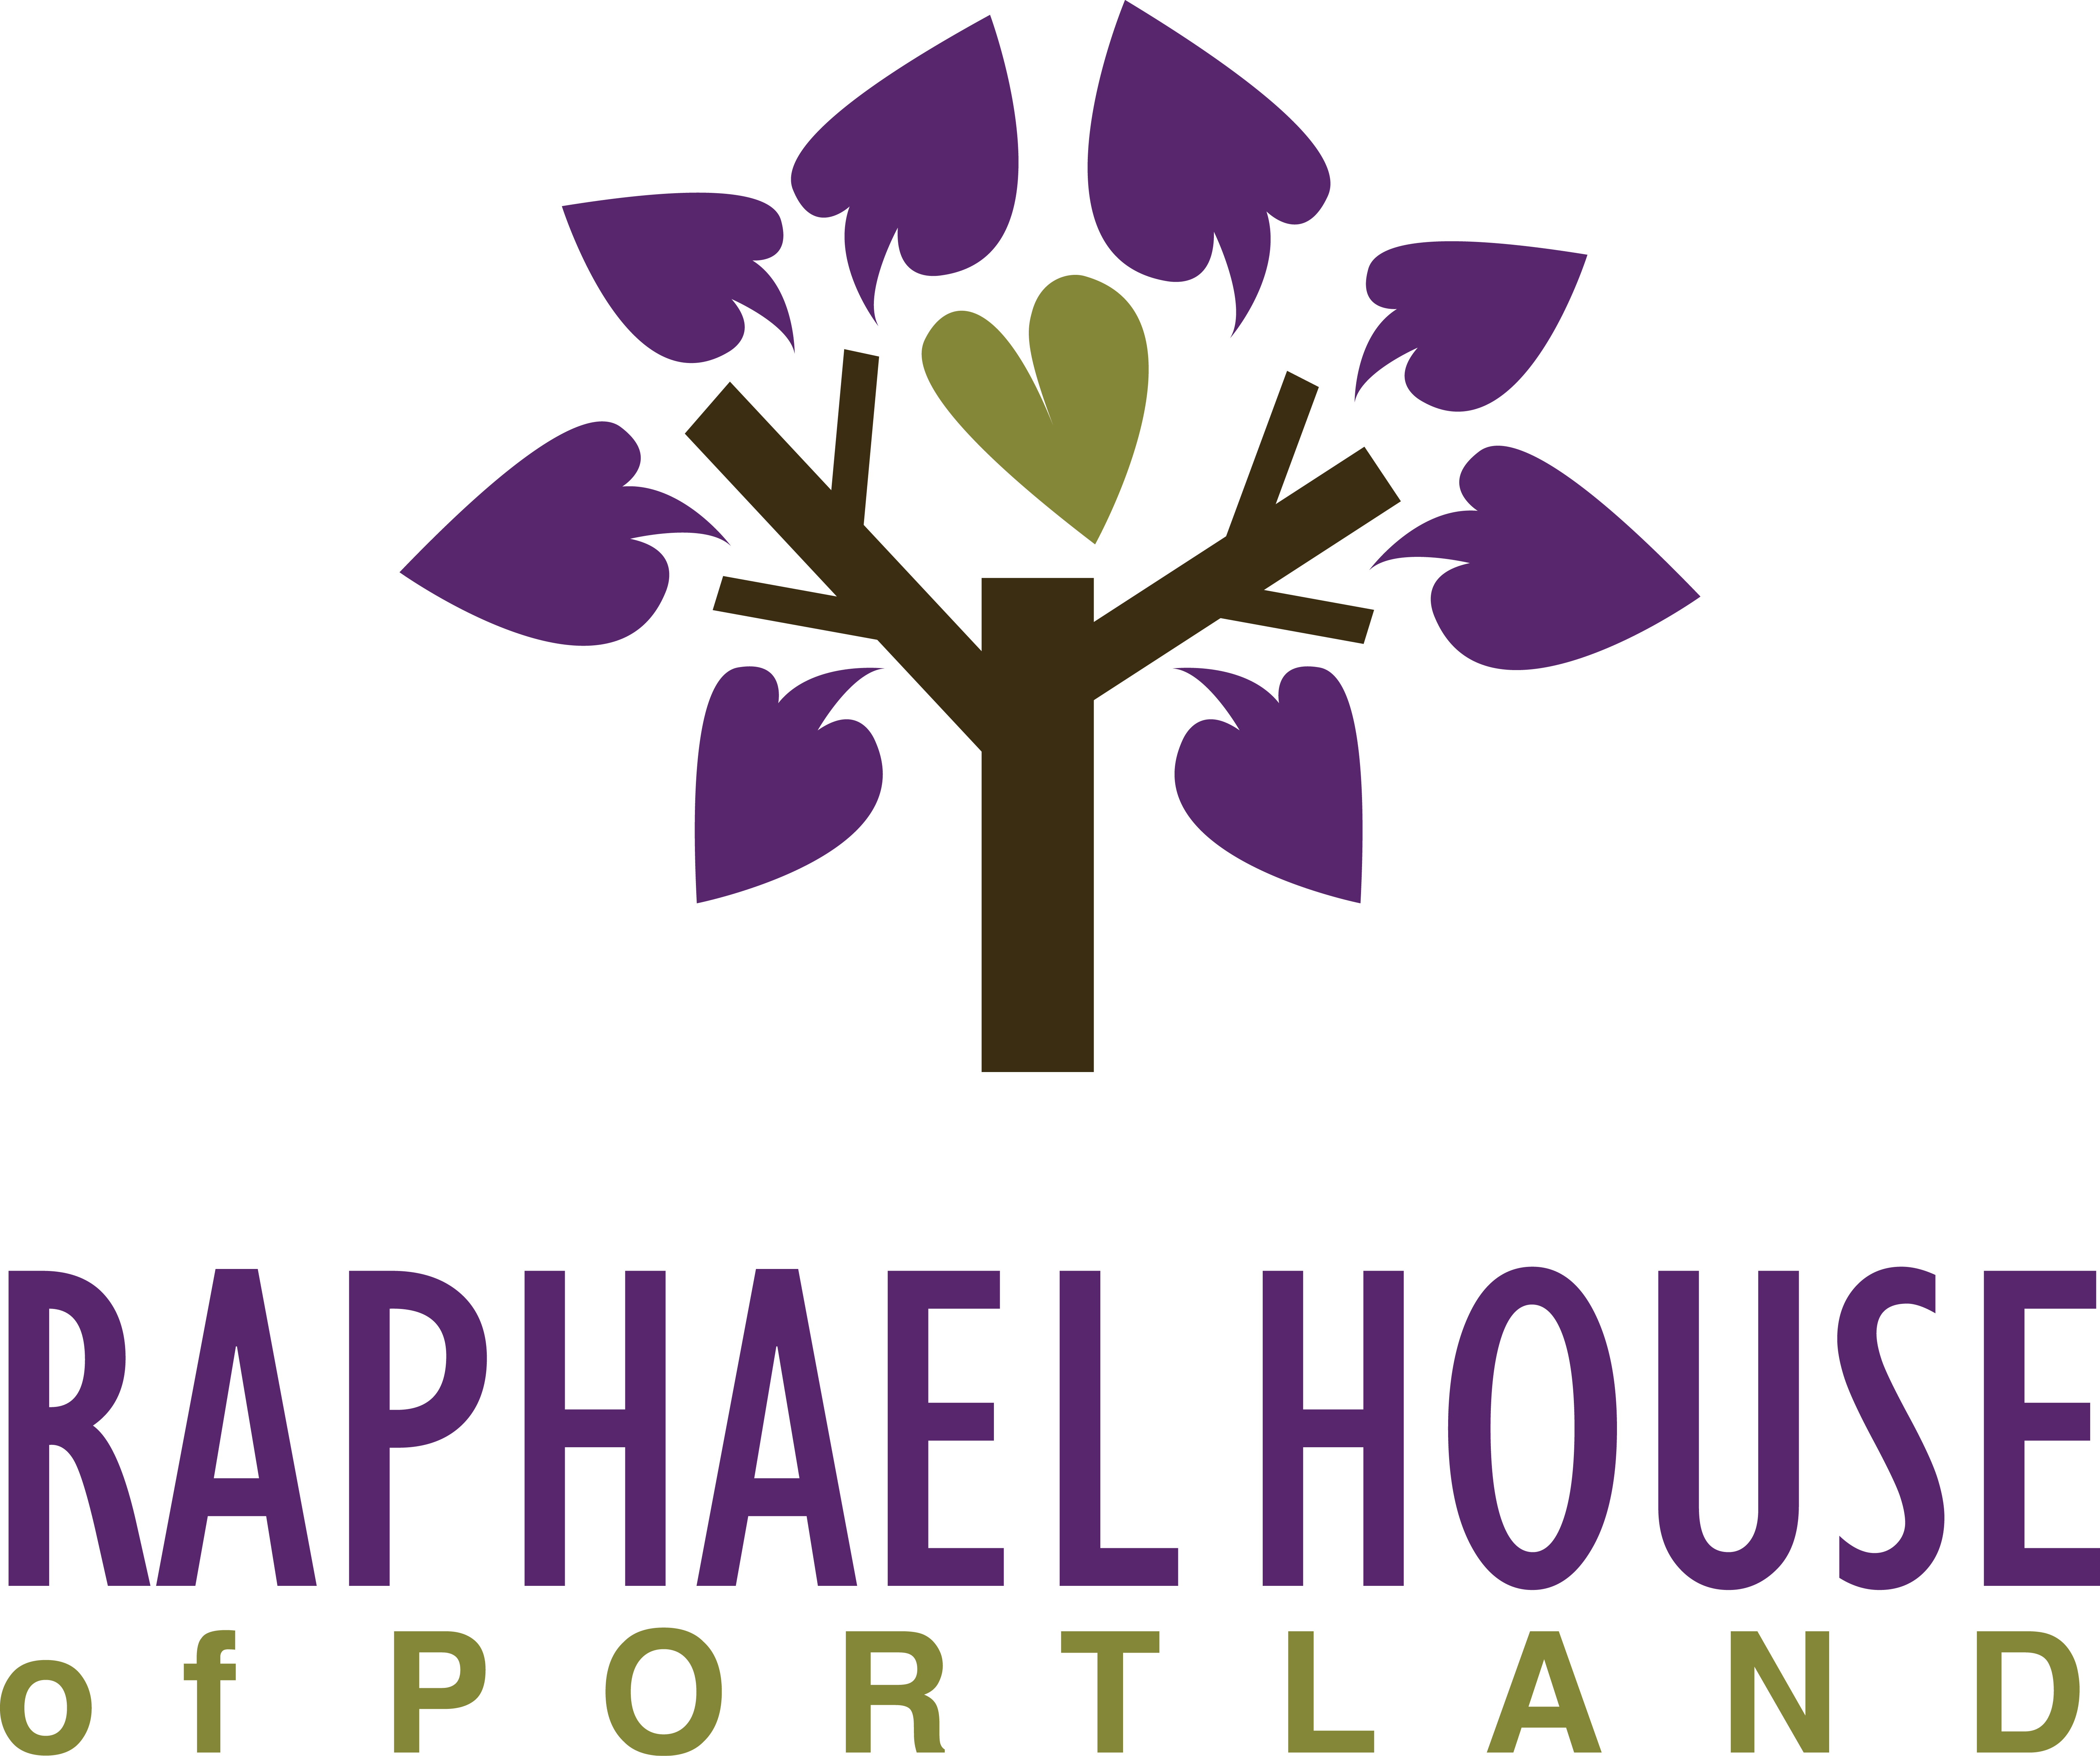 Raphael House of Portland